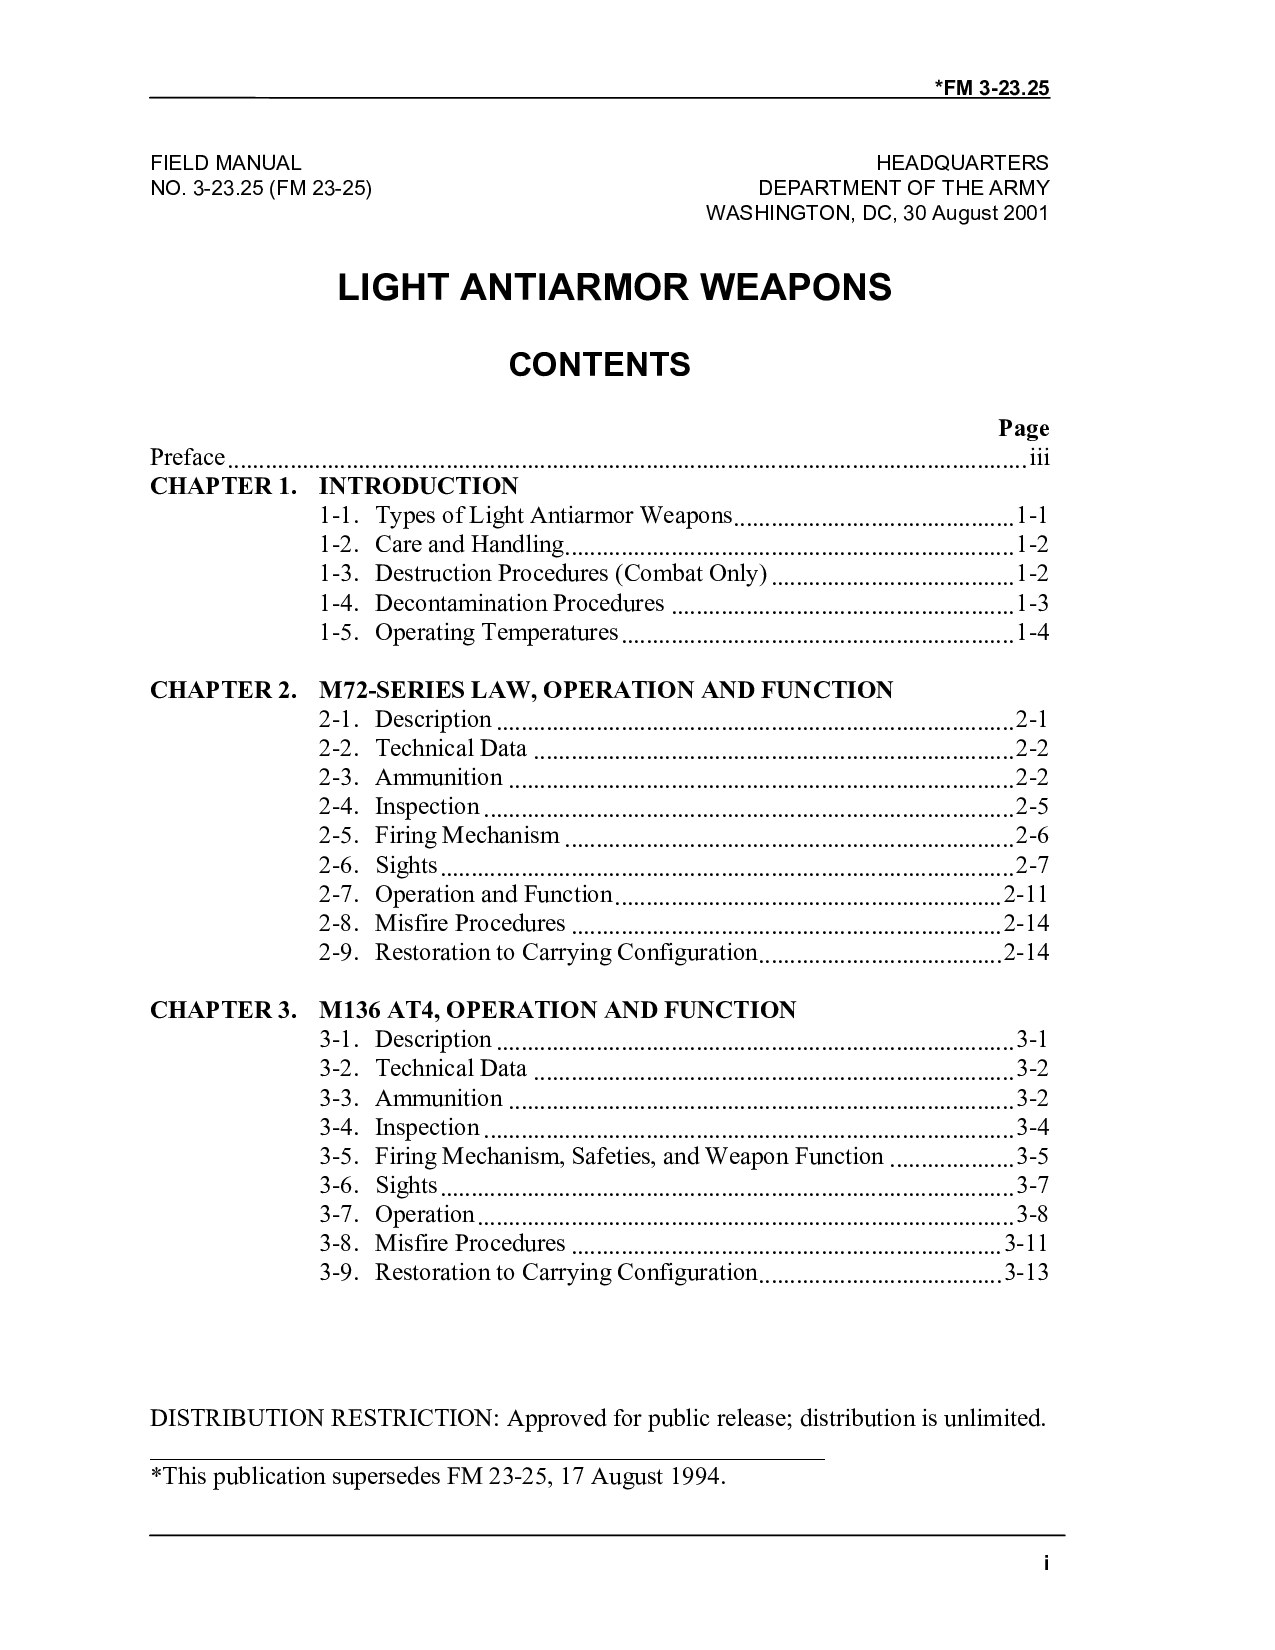 FM 3-23-25 Light Anti-Armor Weapons